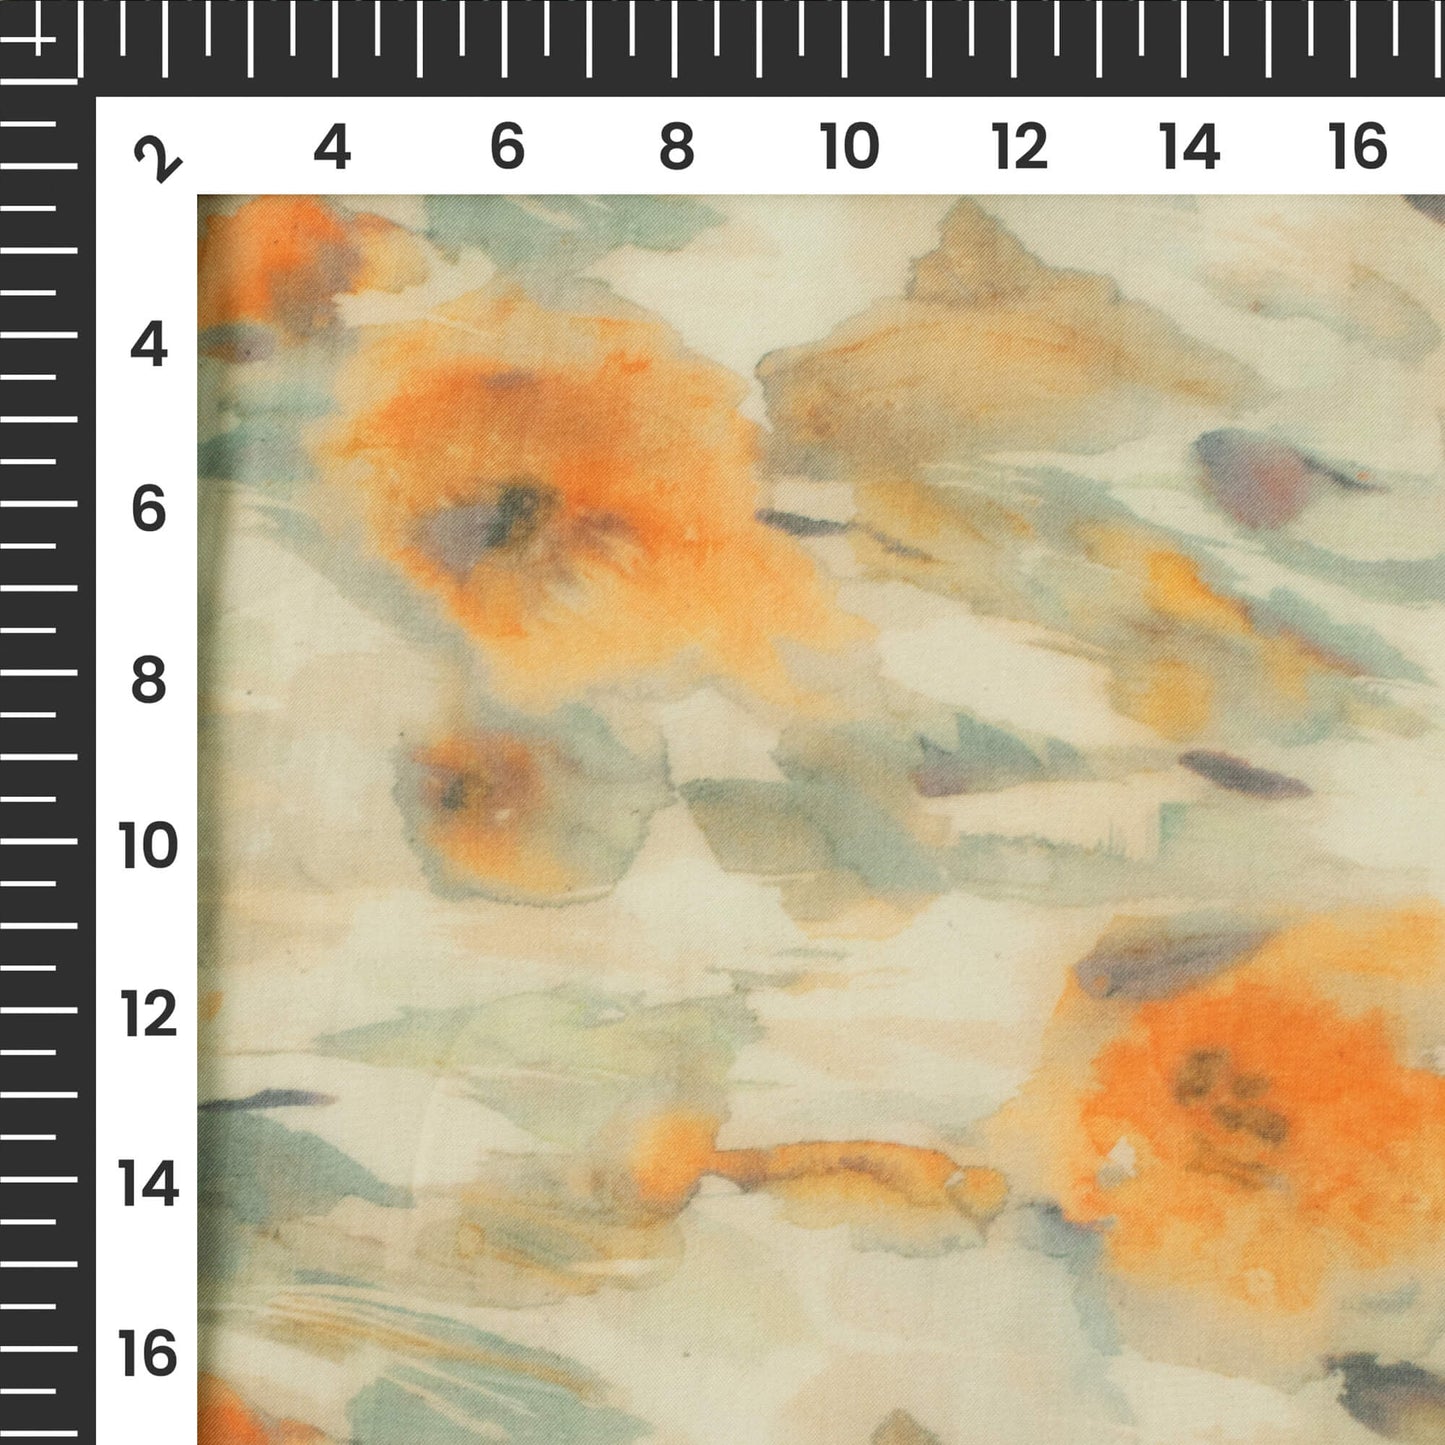 Tiger Orange Floral Digital Print Pure Organza Fabric